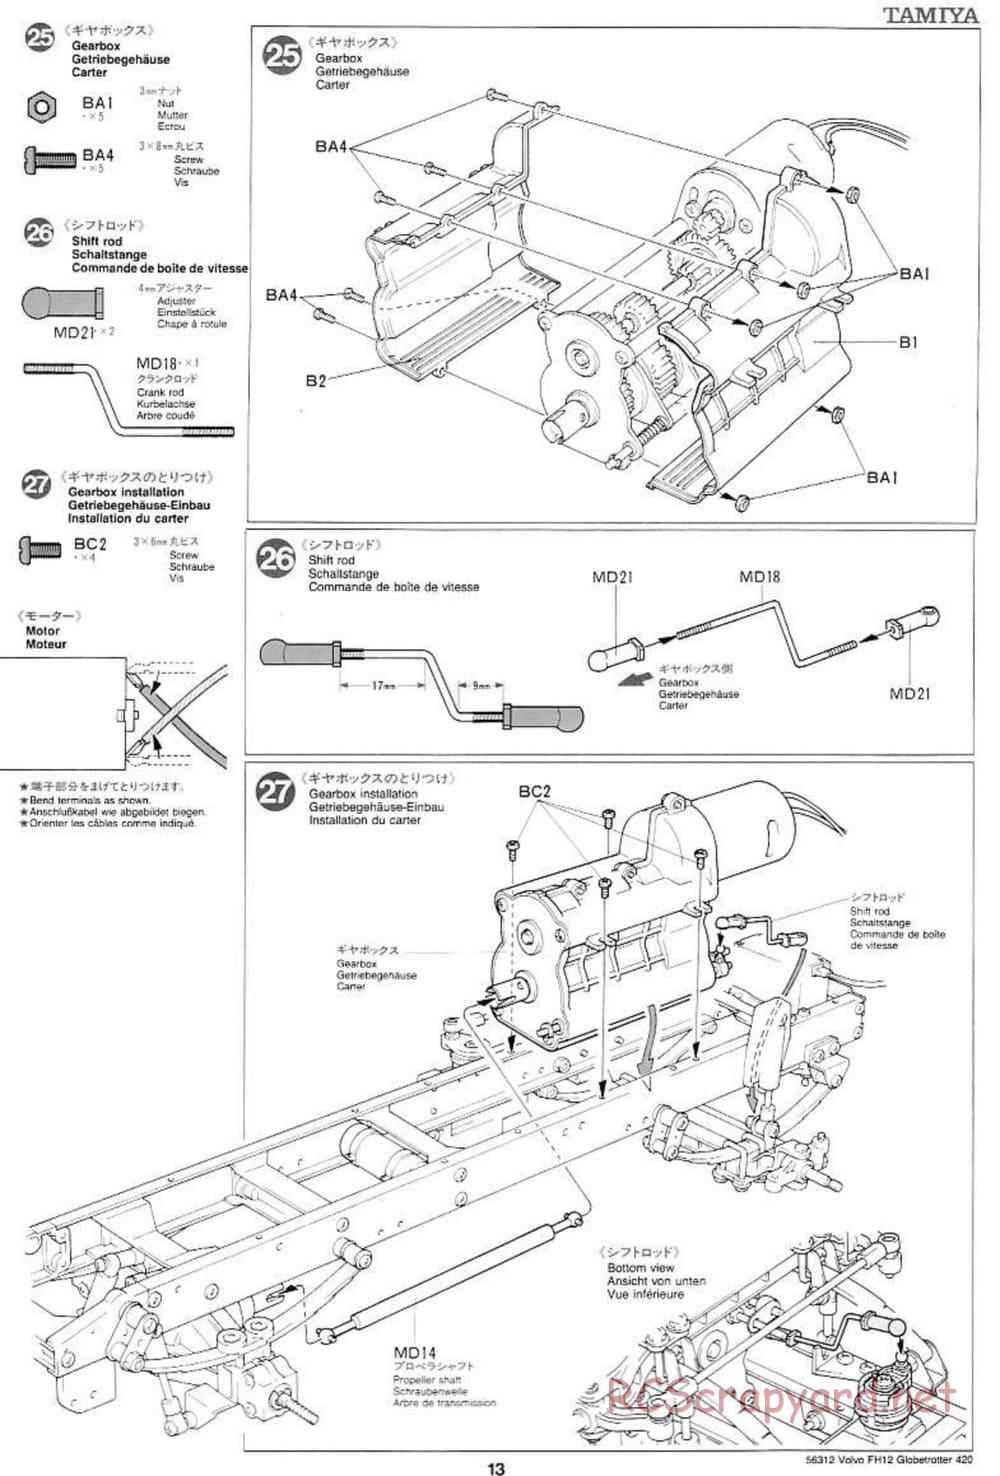 Tamiya - Volvo FH12 Globetrotter 420 - Manual - Page 13